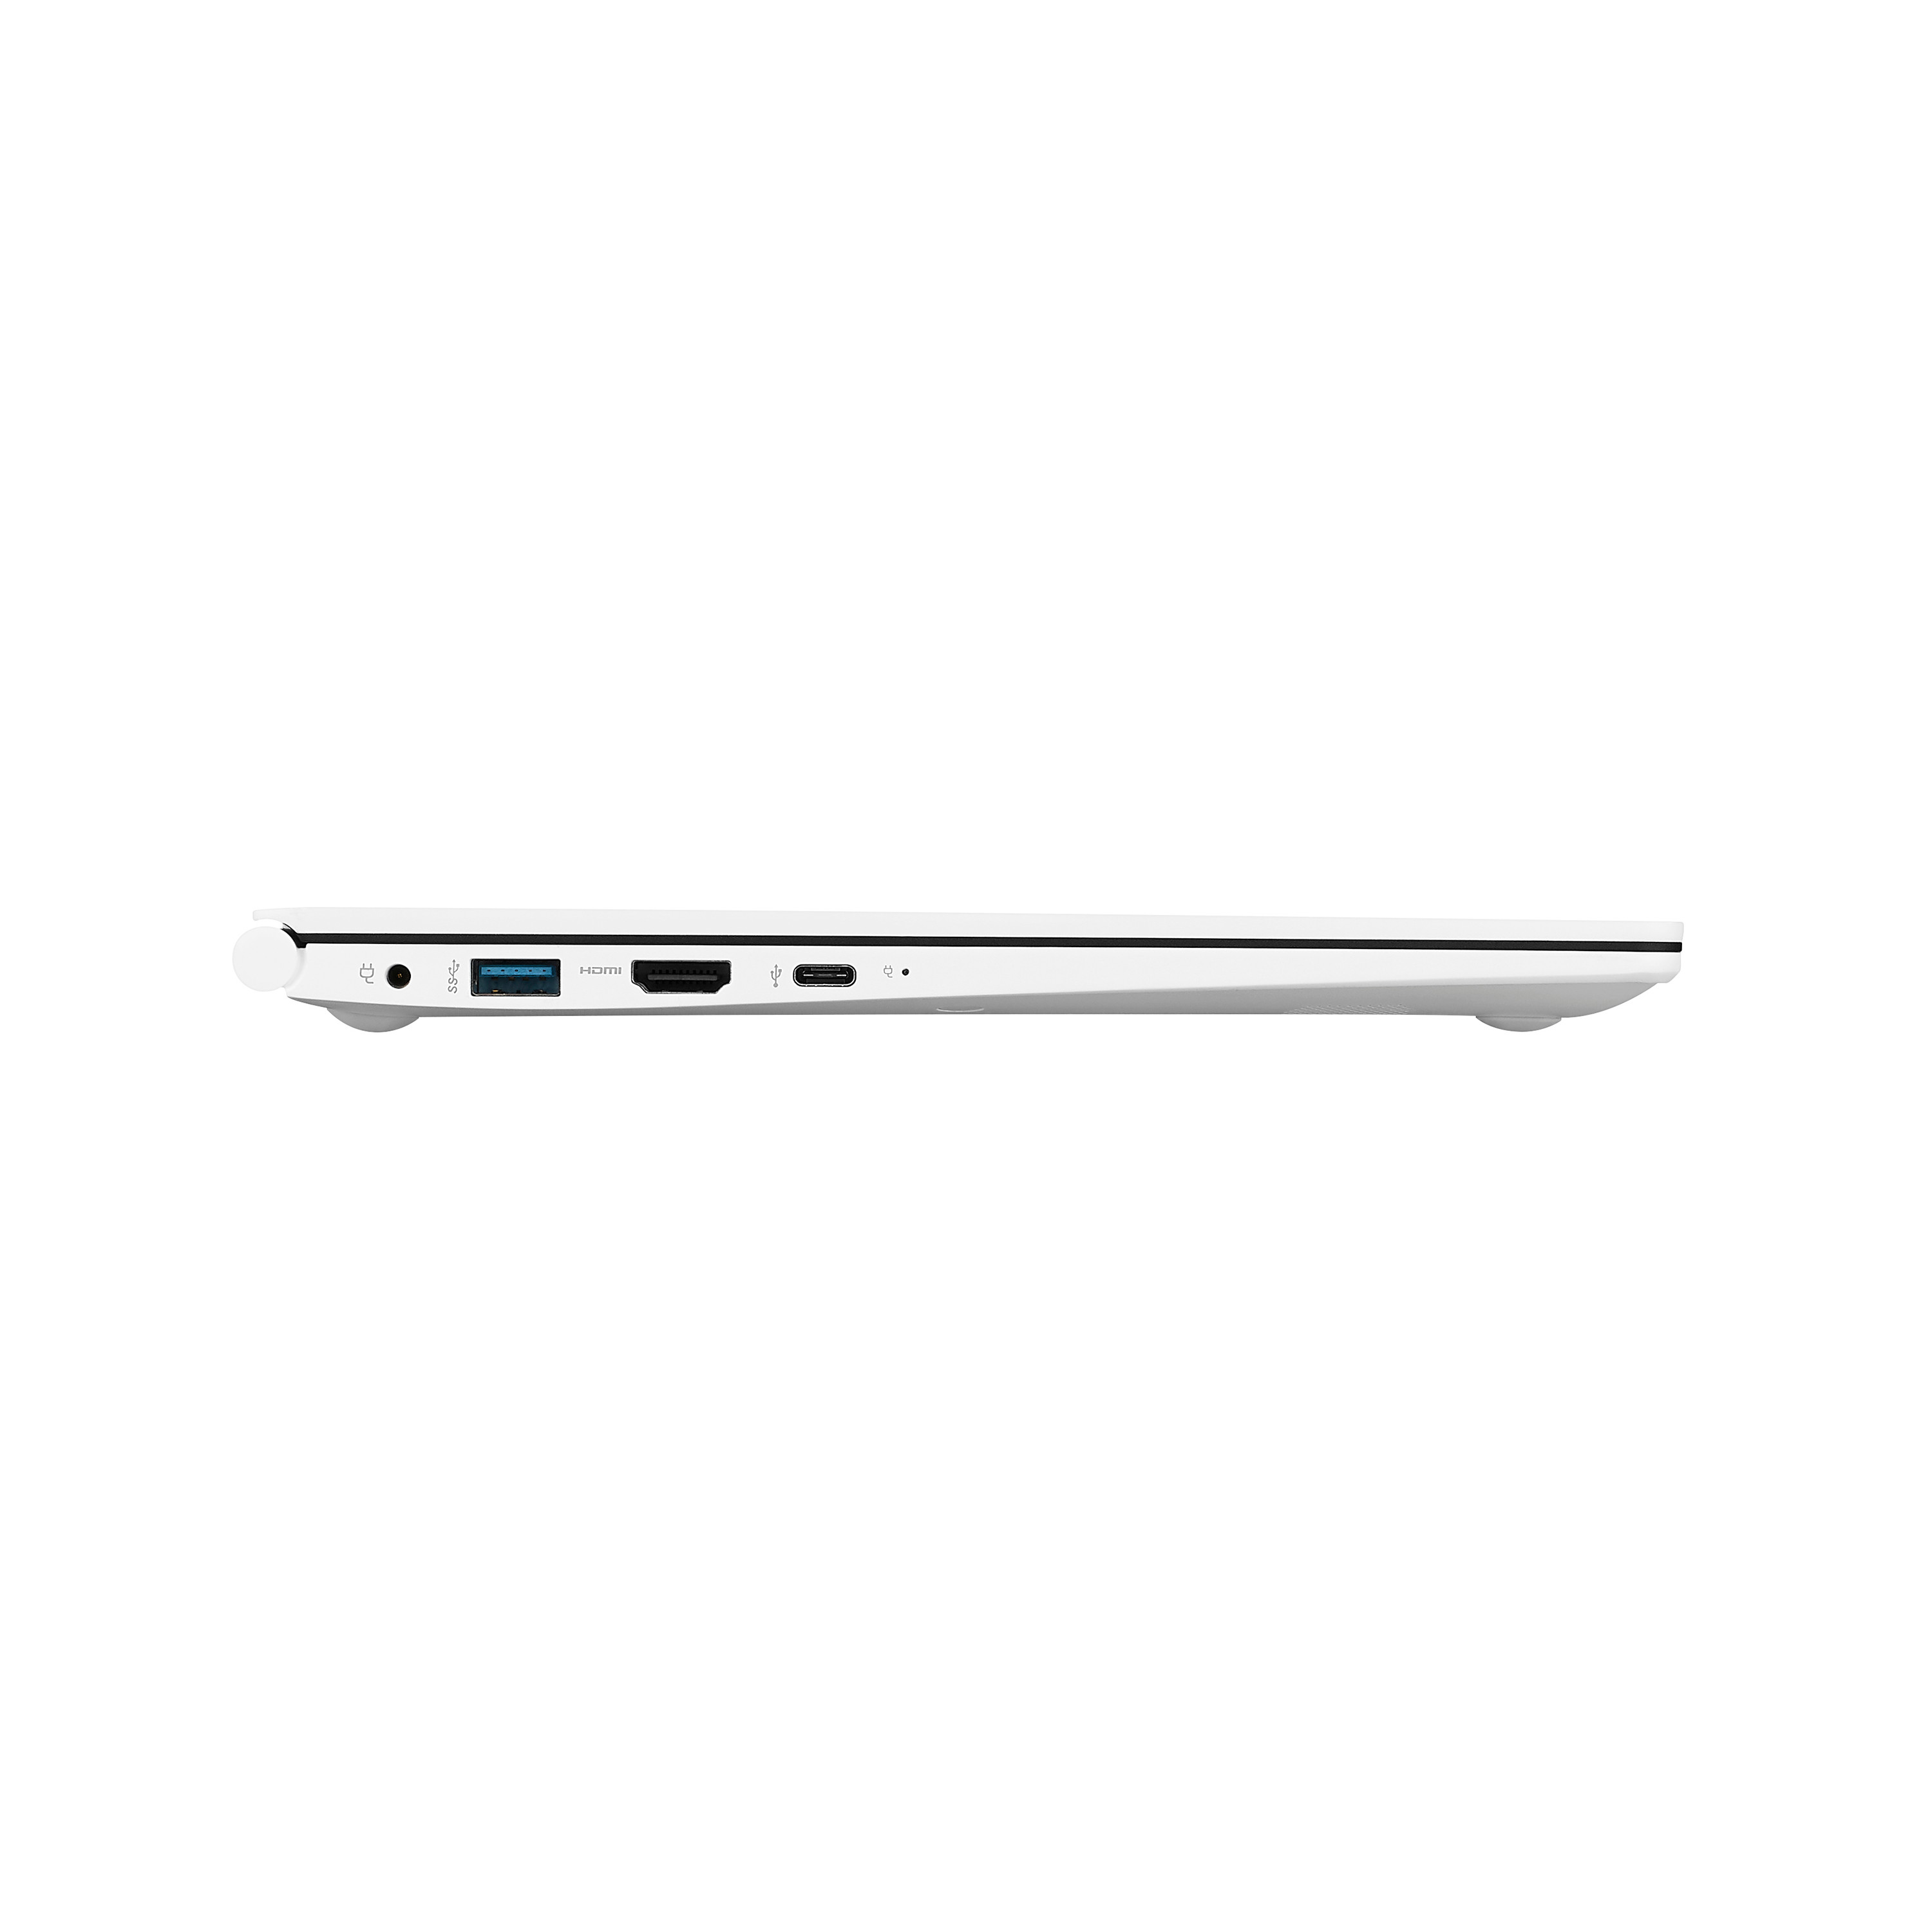 LG gram 14 inch Ultra-Lightweight Laptop with Intel Core i5 processor, 14Z990-U.AAW5U1 - image 4 of 10